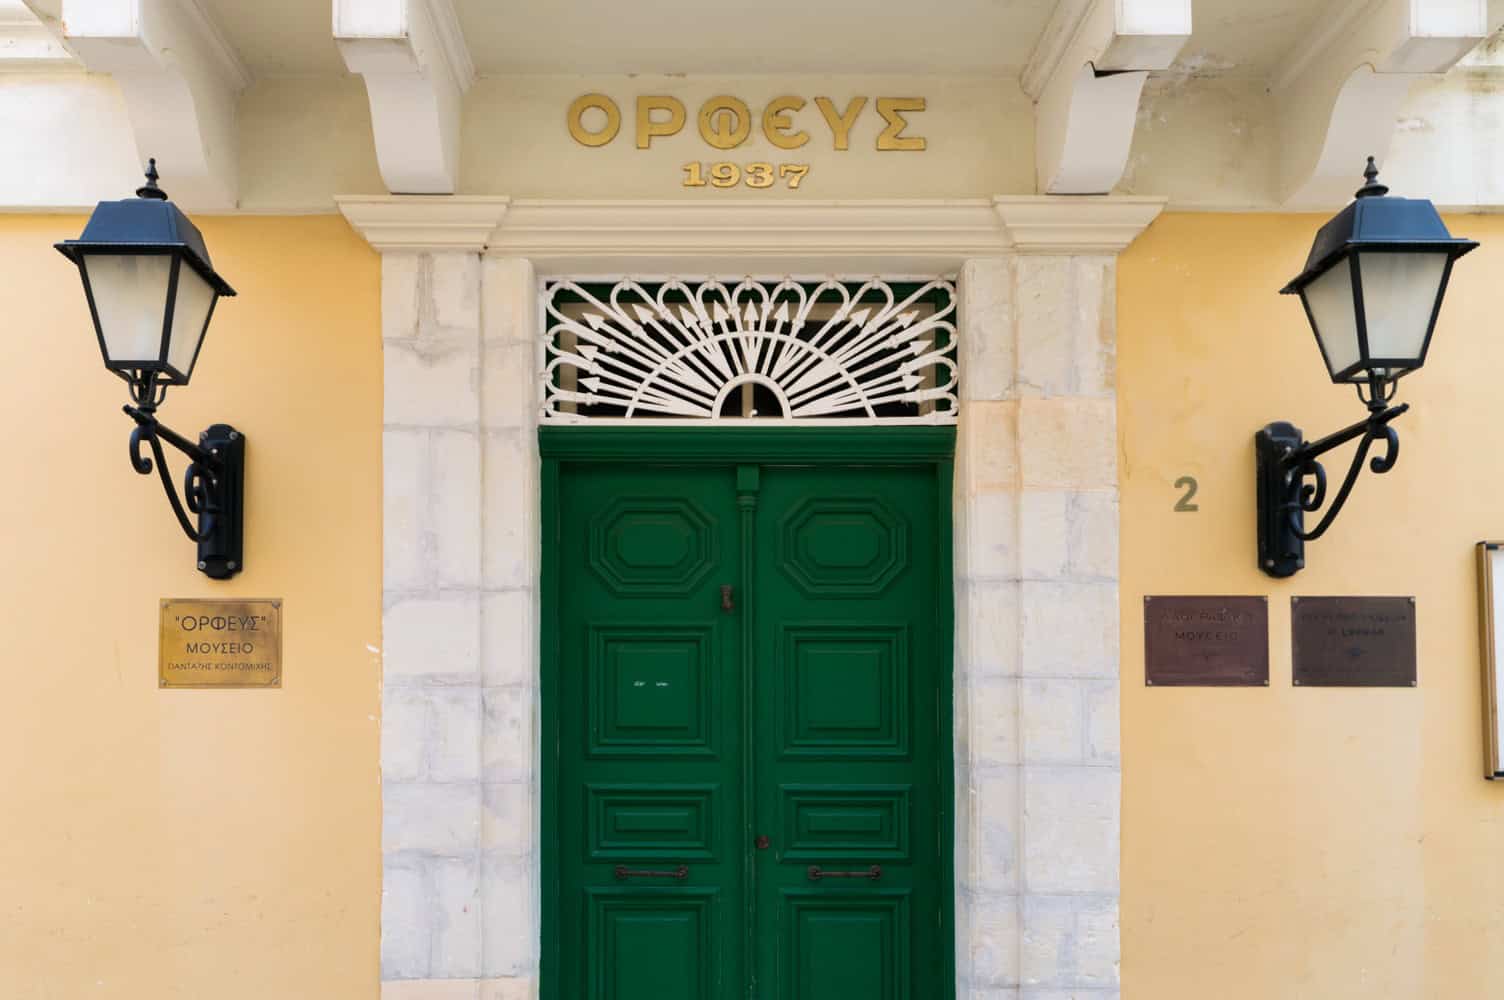 Pantazis Kontomichis Folkloric Museum of the “Orpheus” Cultural Group